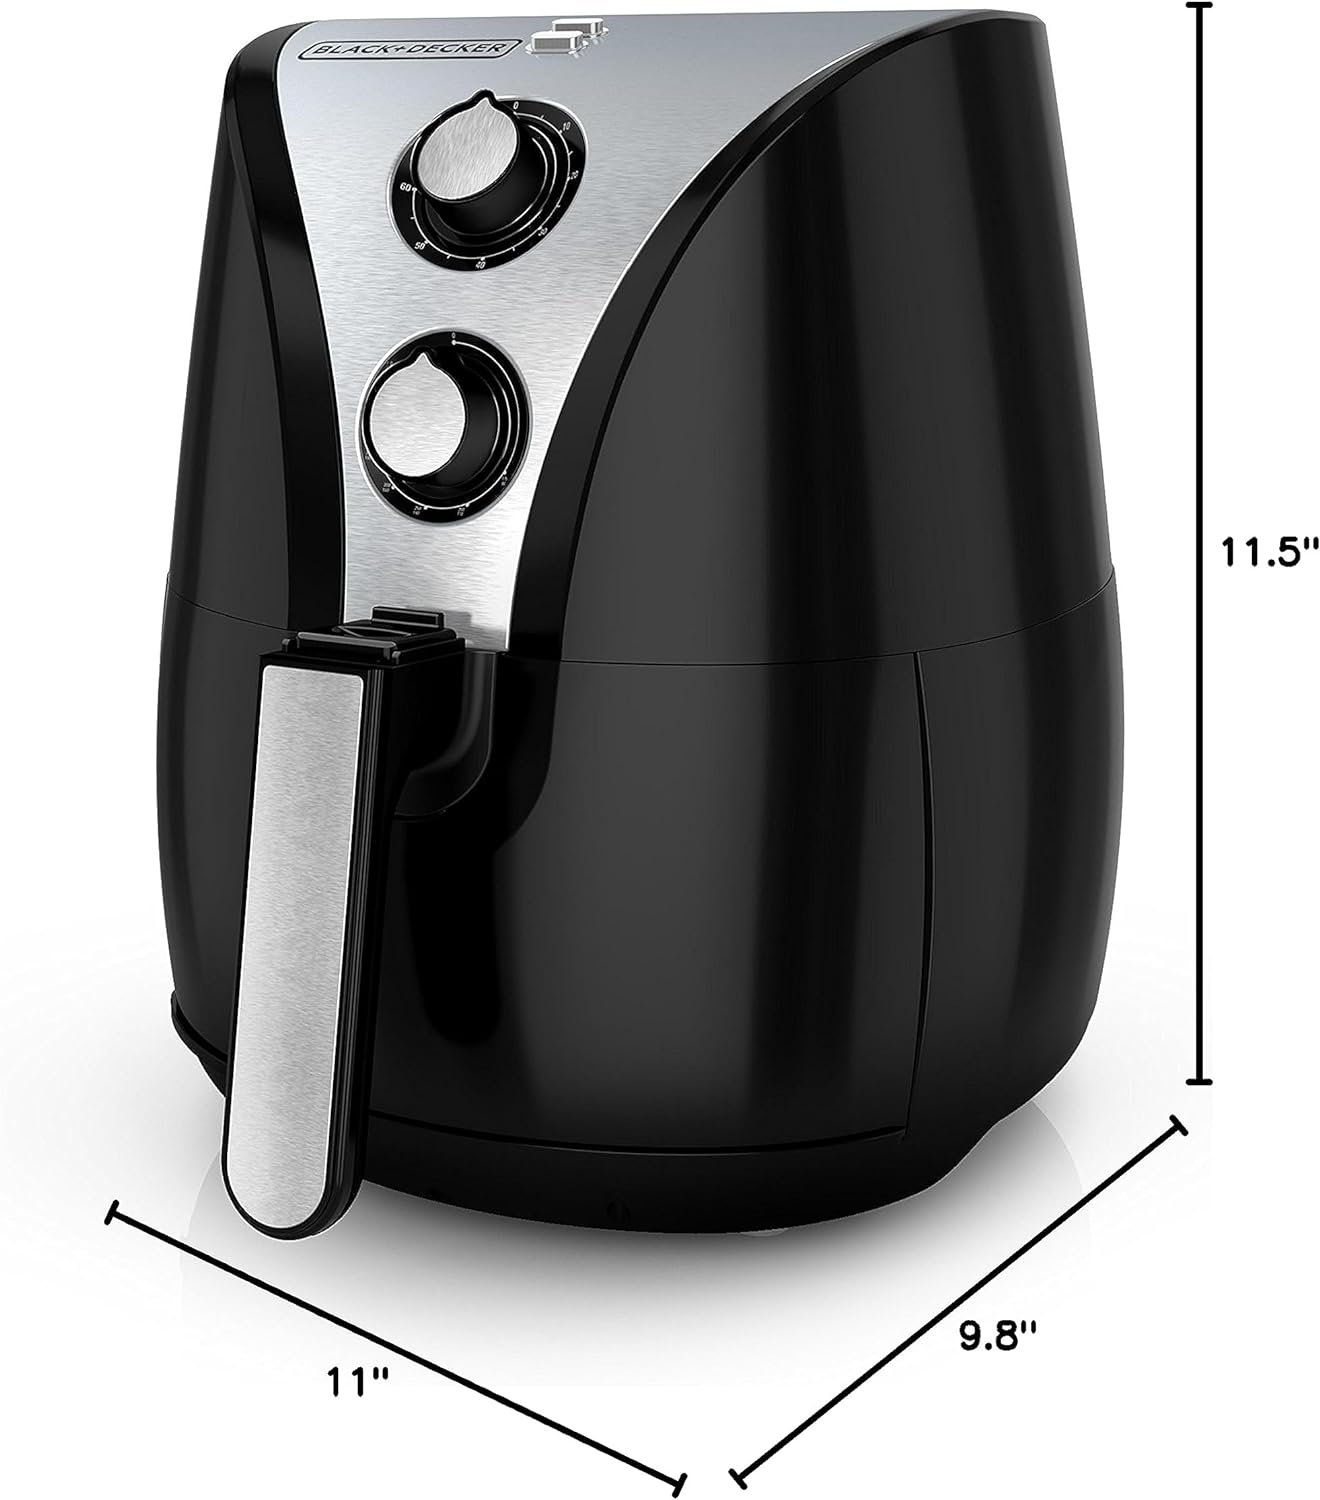 BLACK+DECKER Purify 2-Liter Air Fryer, Black/Stainless Steel, HF110SBD